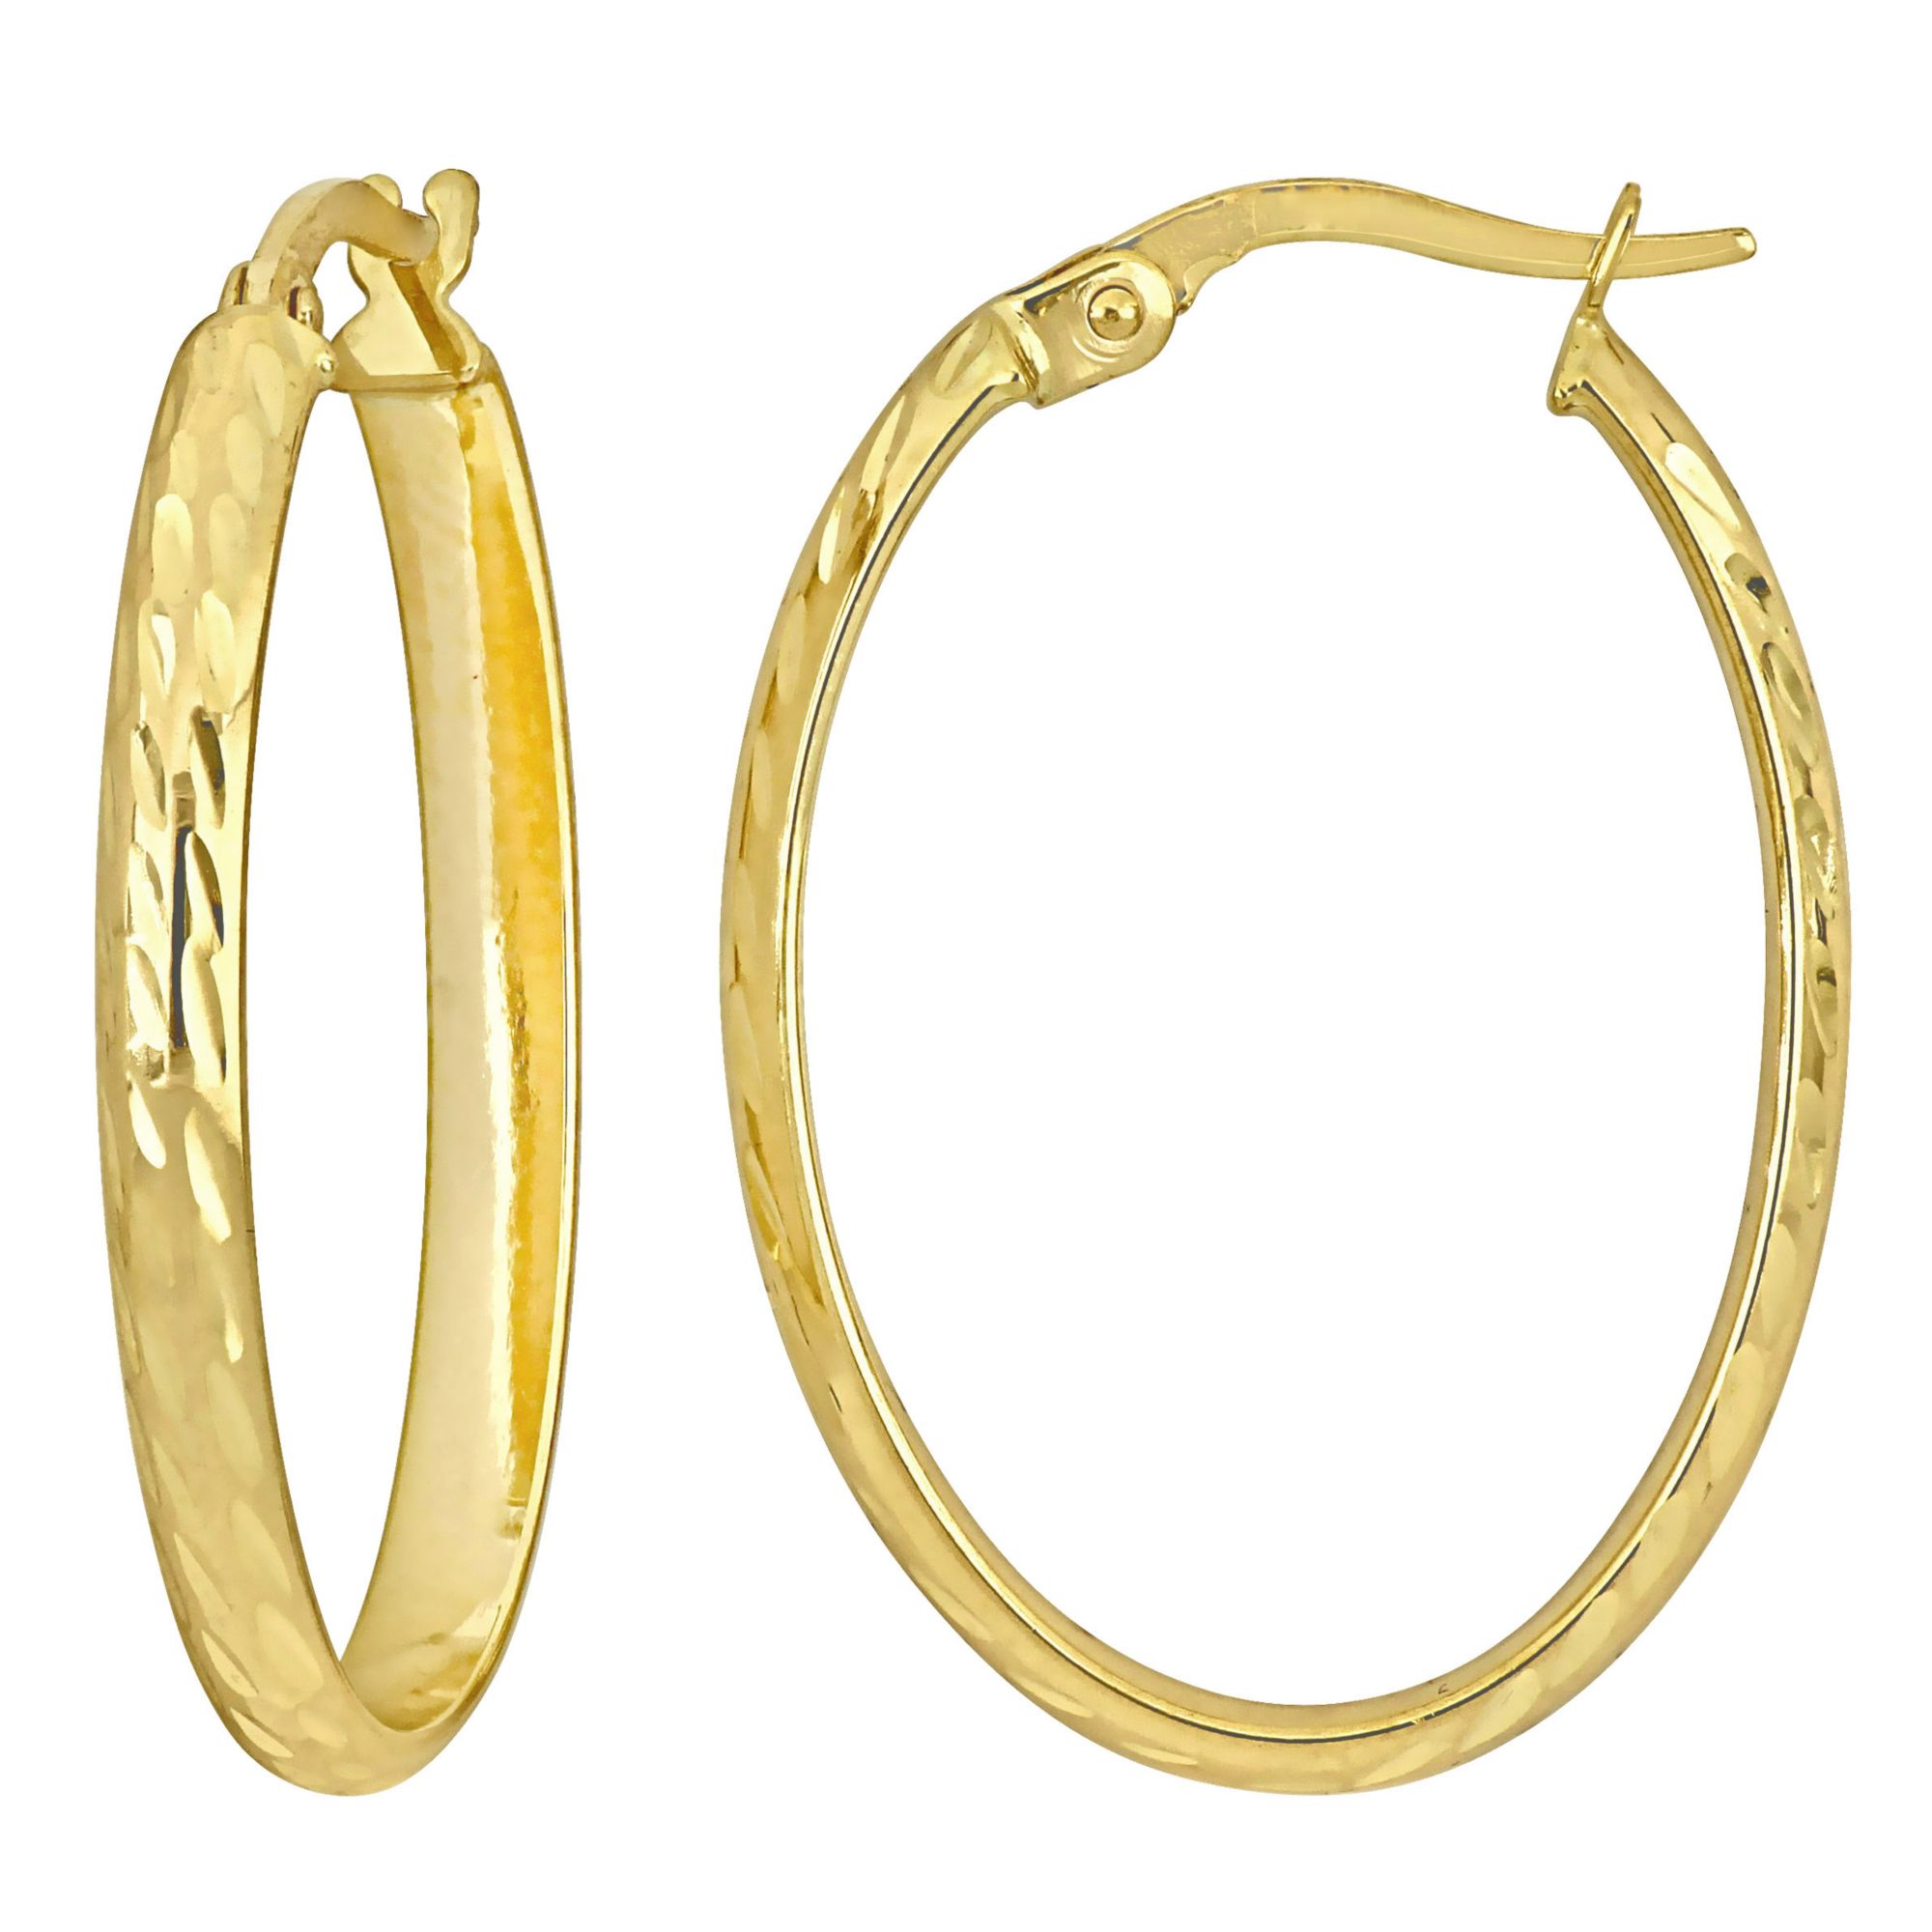 29mm Oval Textured Hoop Earrings in 10k Yellow Gold | BJ's Wholesale Club